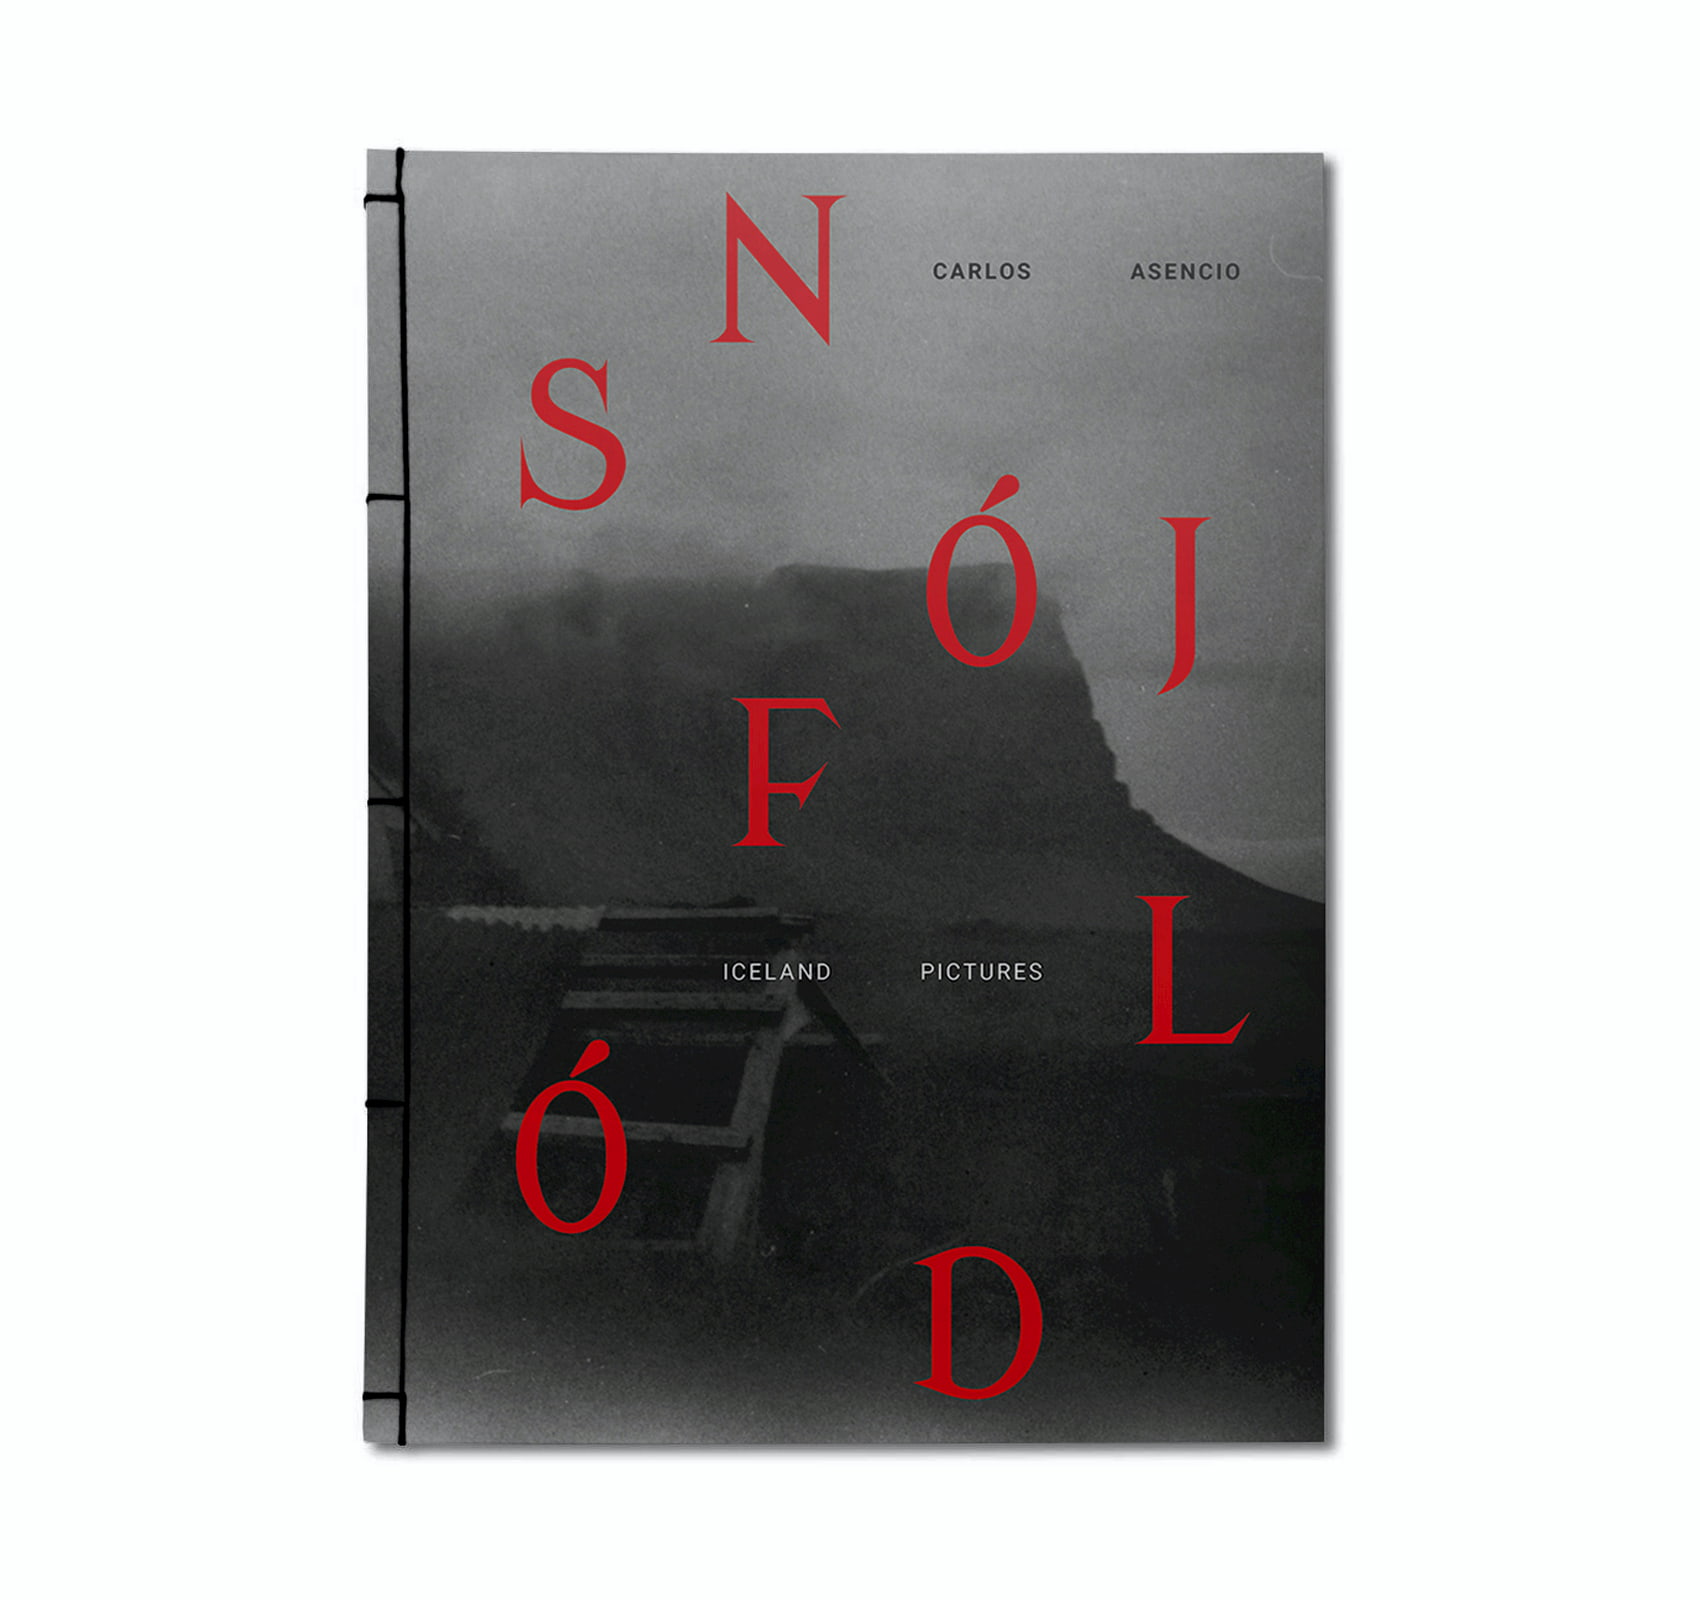 Portada del libro Snjoflod. Libro de fotografía sobre Islandia.